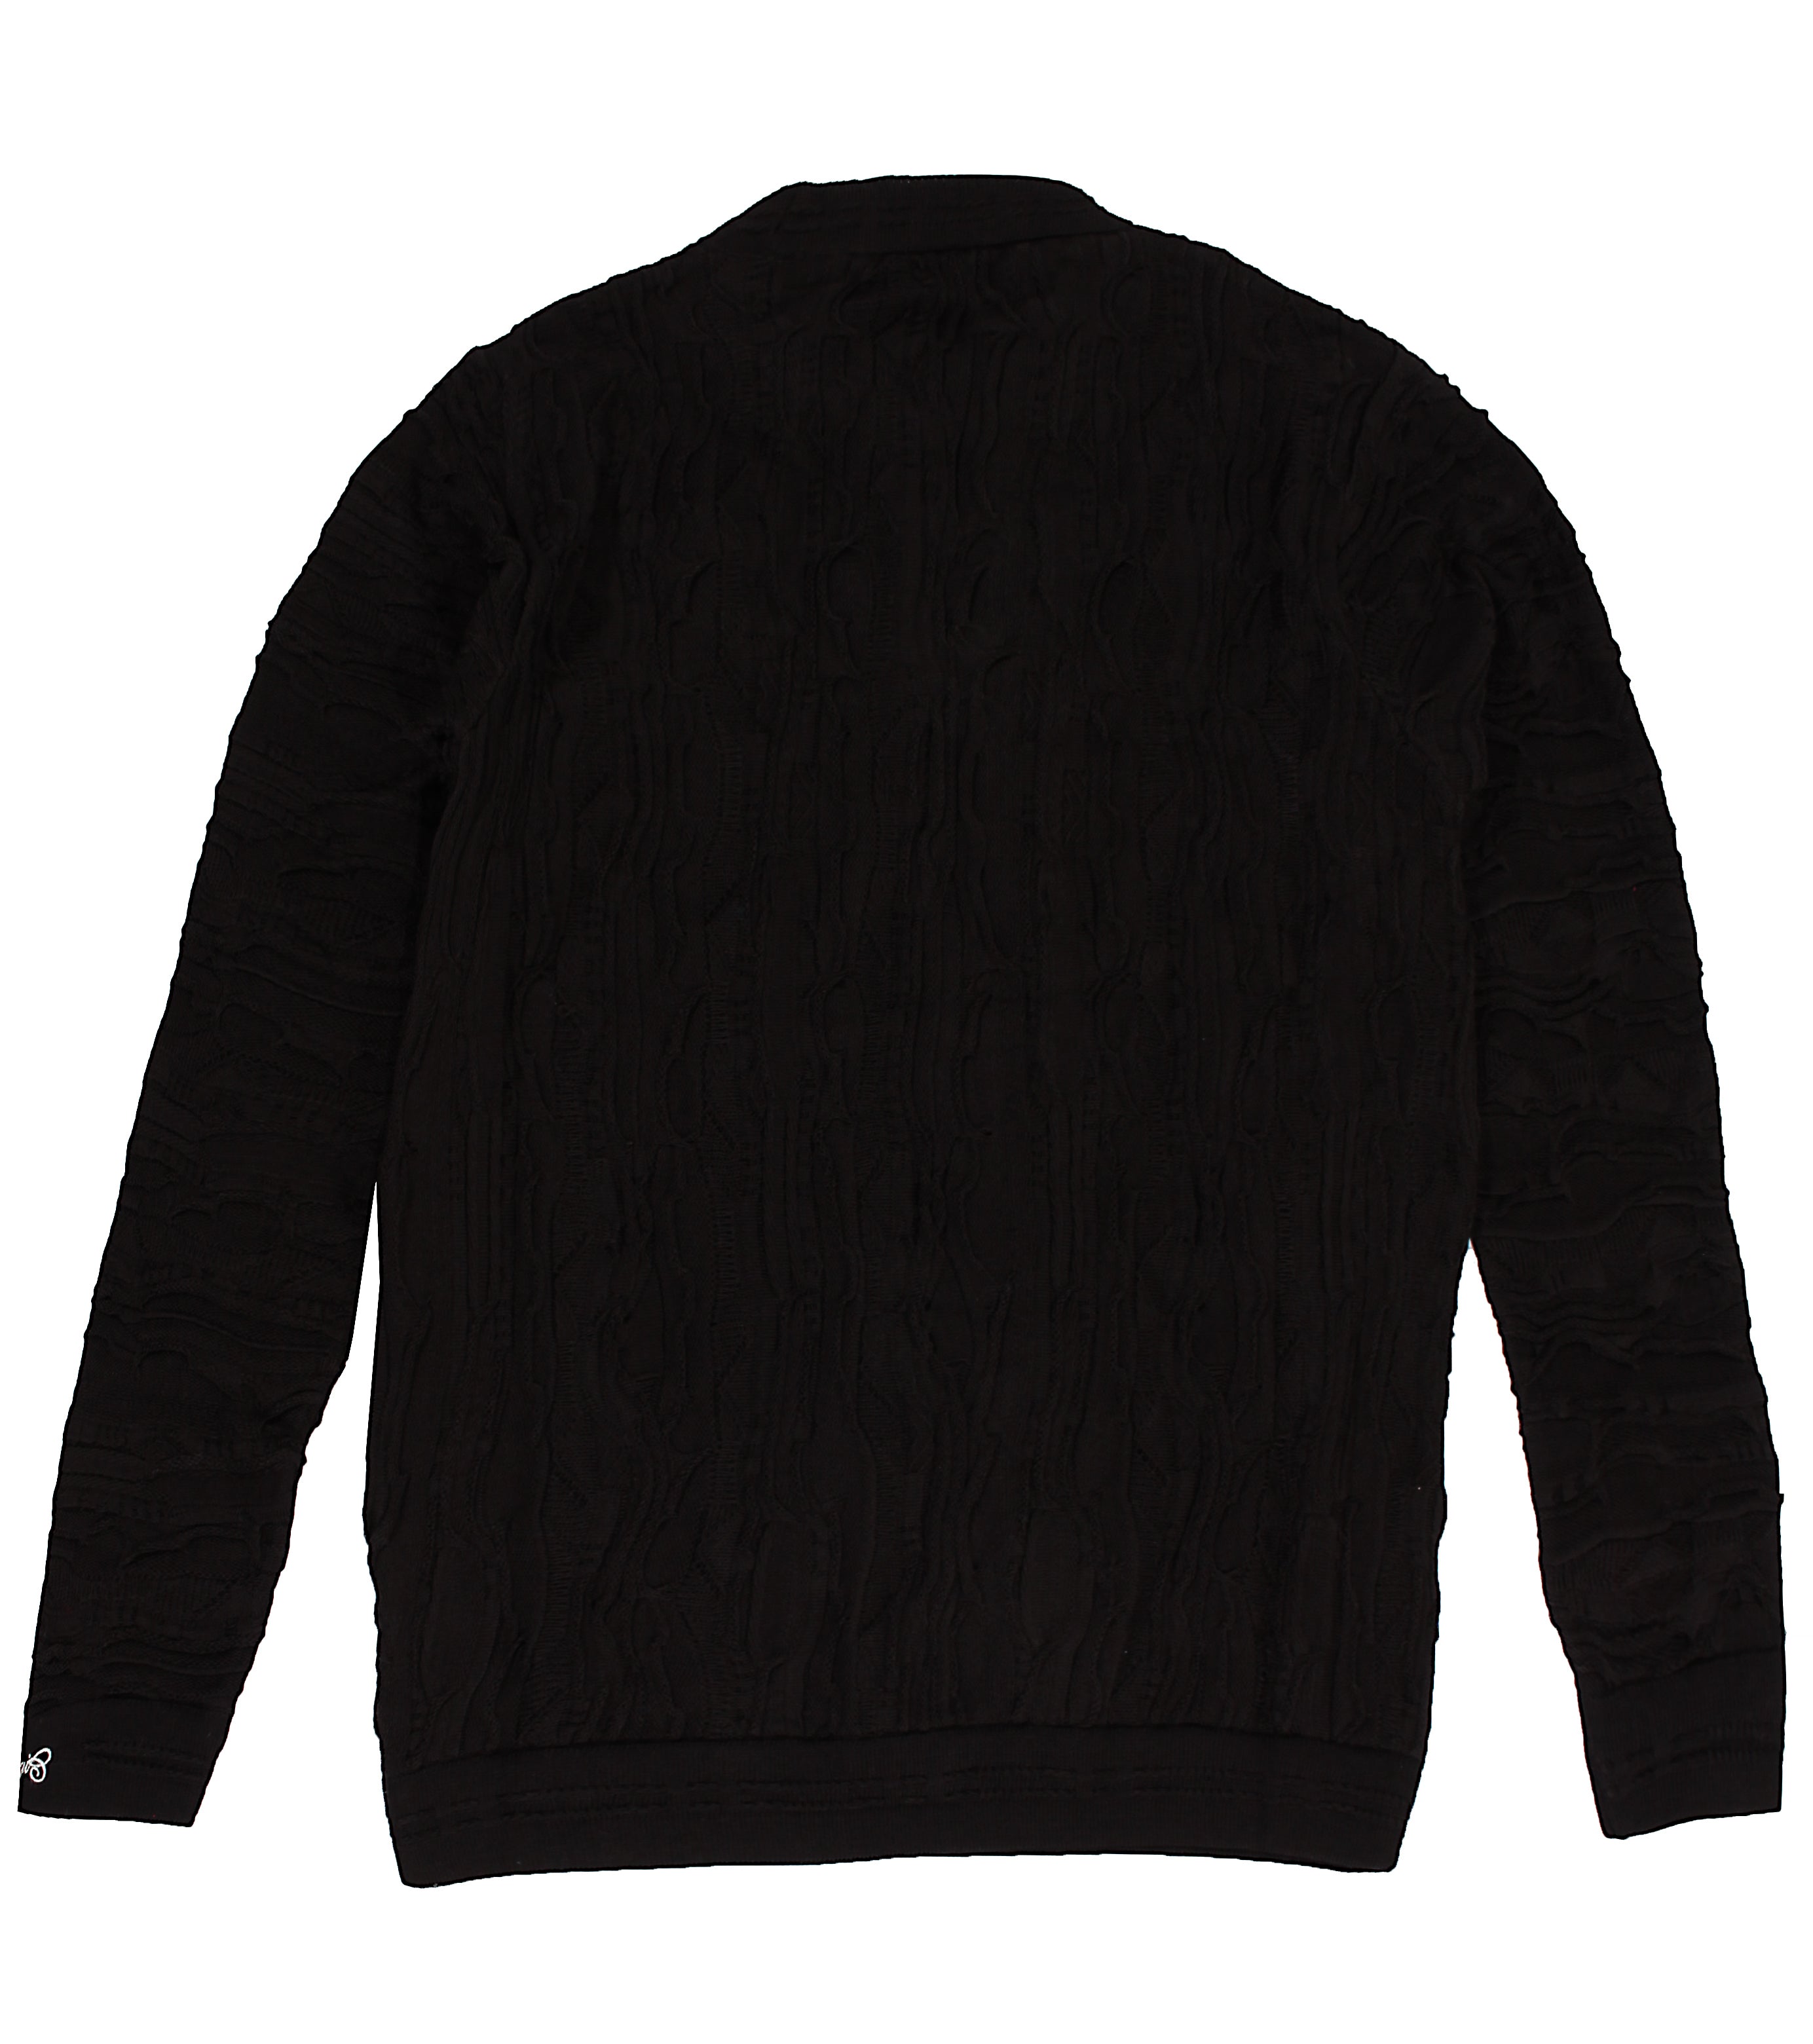 Coogi Black Heavy Knit Sweater - PureAtlanta.com